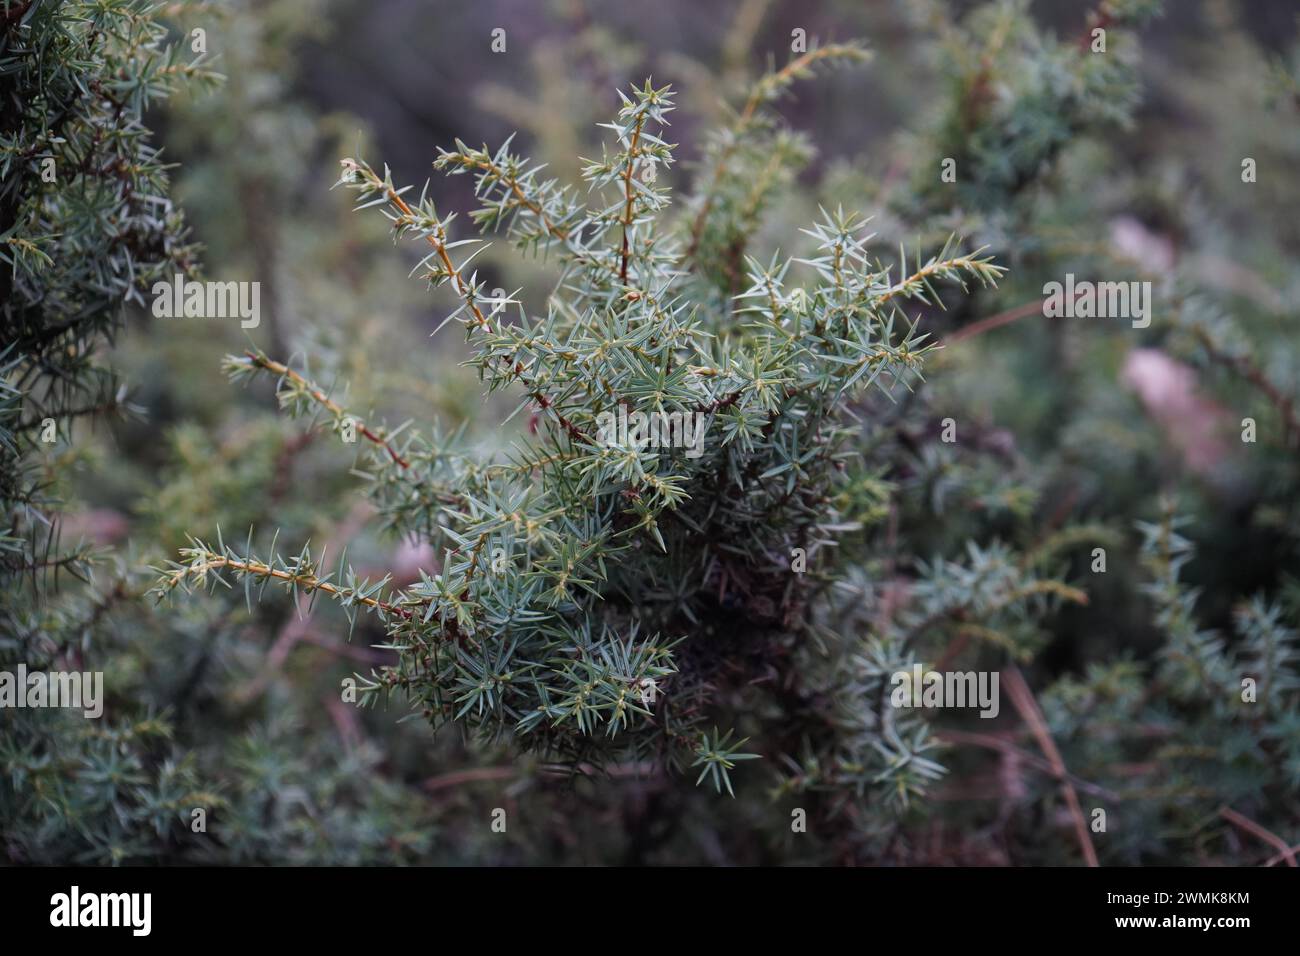 Juniper, The temple juniper(Juniperus rigida) Stock Photo